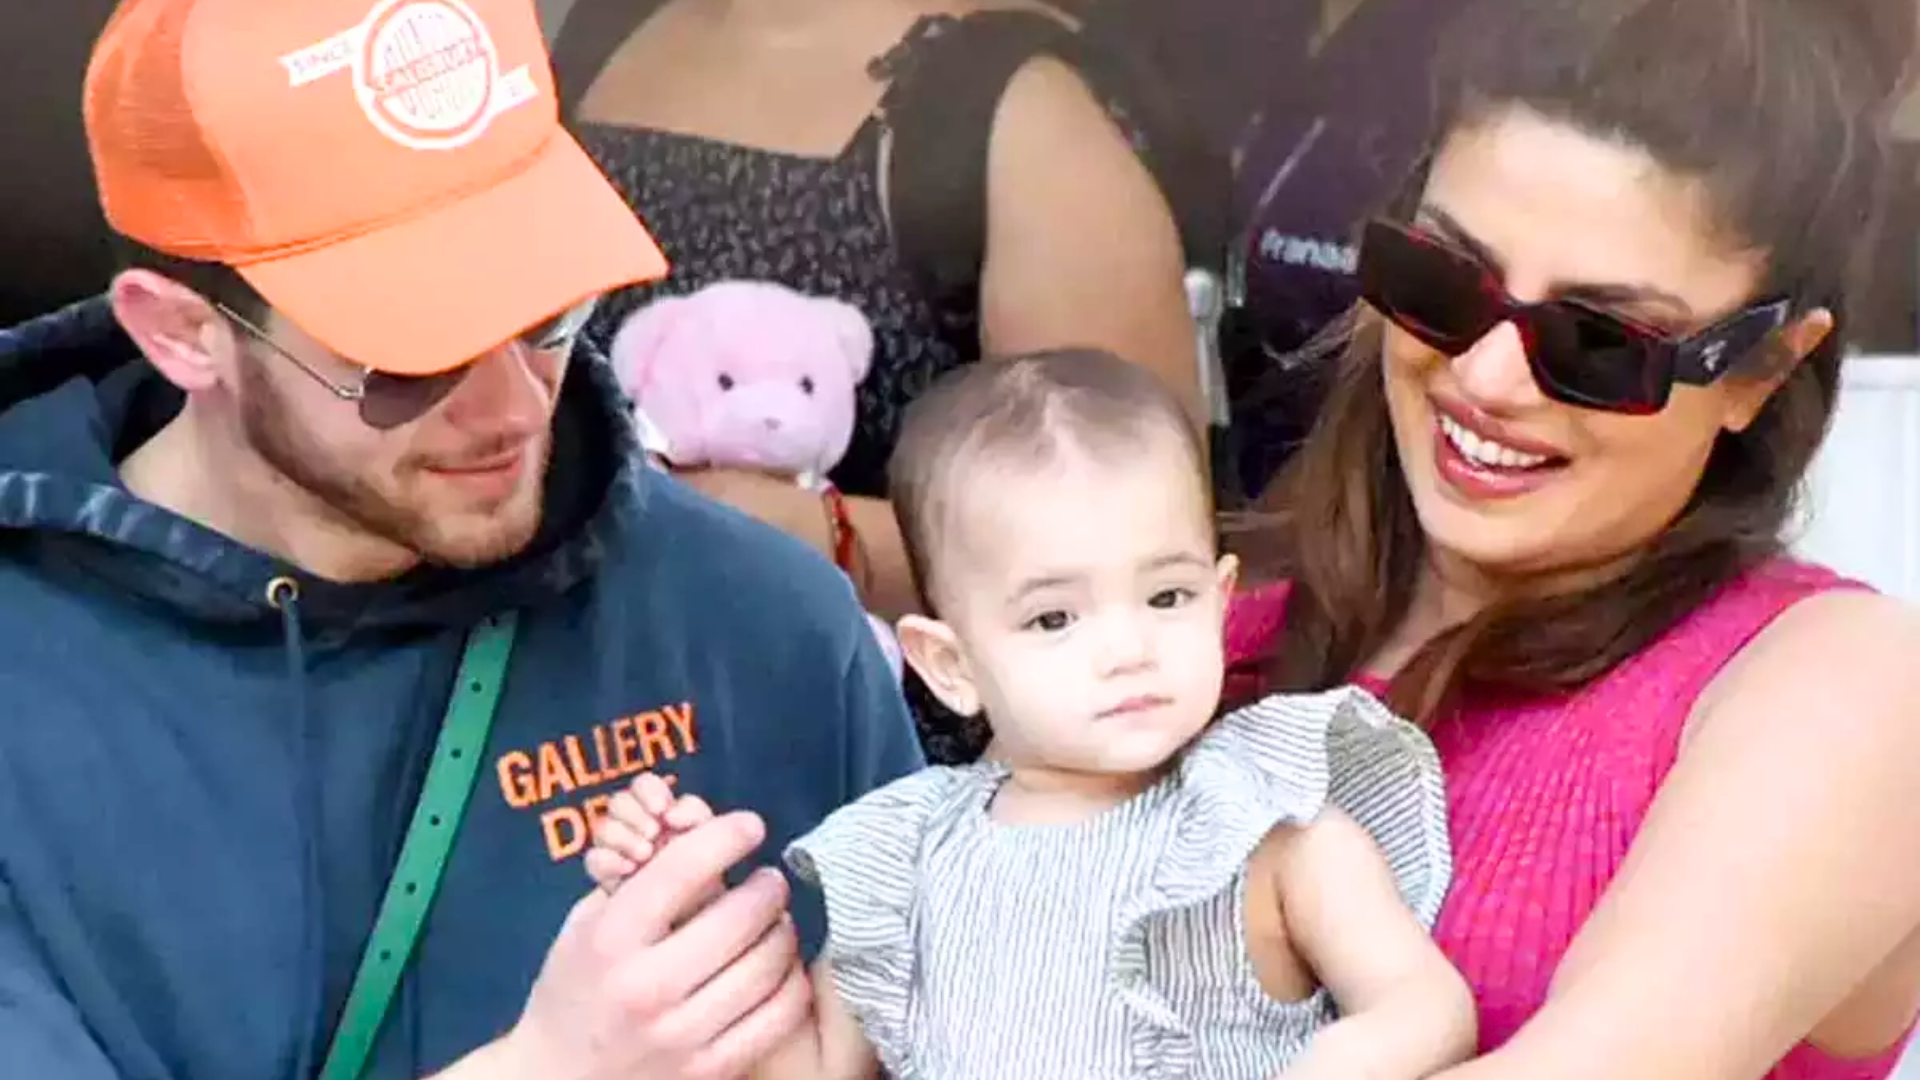 WATCH: Nick Jonas Asks Paparazzi Not To Make Noise As Priyanka Chopra Holds Close Her Daughter Malti Marie While Leaving India